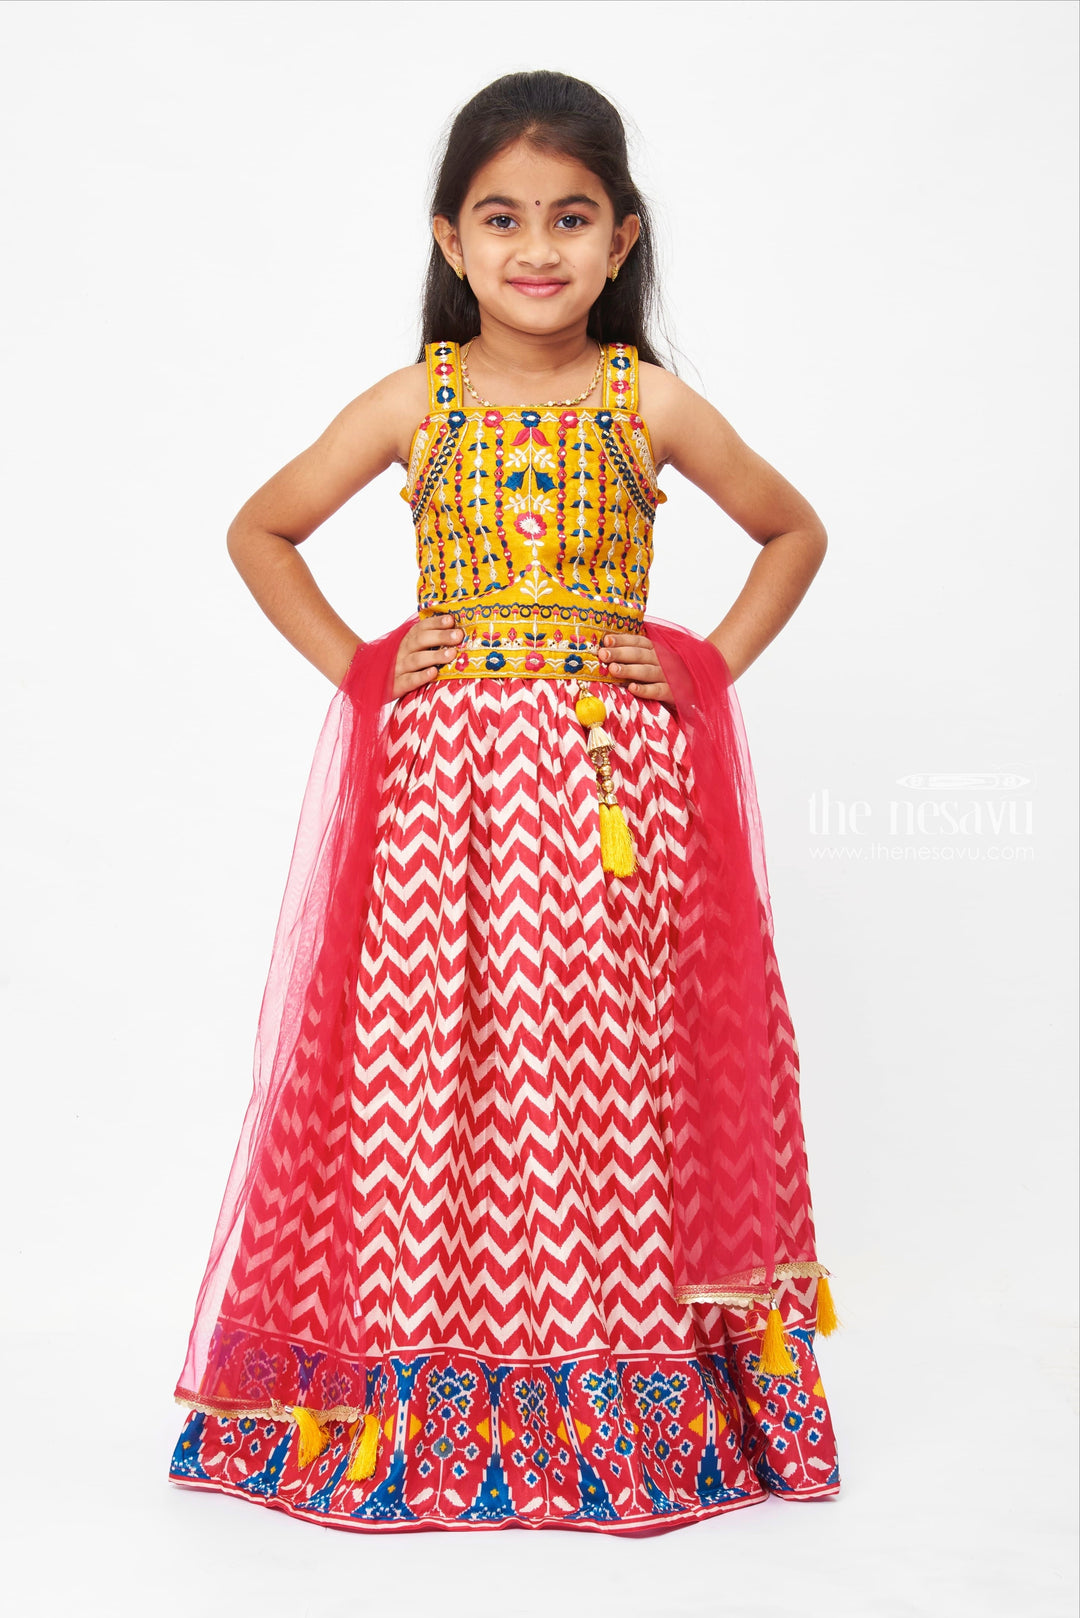 The Nesavu Girls Lehenga Choli Vibrant Yellow Top and Chevron Print Ethnic Lehenga Choli for Girls Nesavu 16 (1Y) / Yellow / Silk Blend GL396A-16 Traditional Indian Dress for kids | Cultural Festival Clothing | The Nesavu